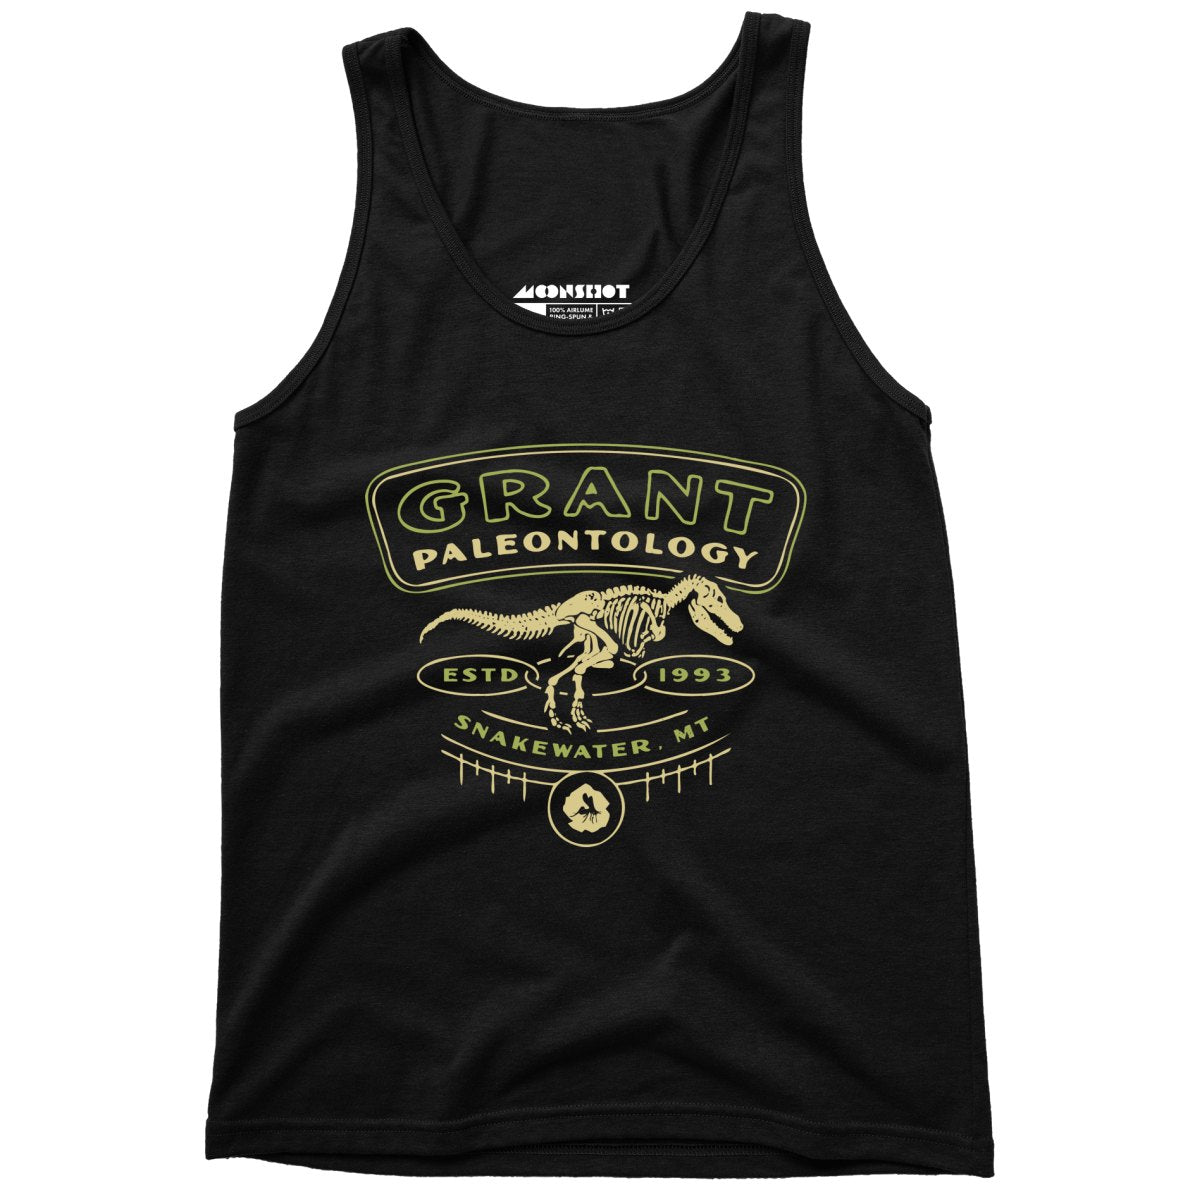 Grant Paleontology - Unisex Tank Top